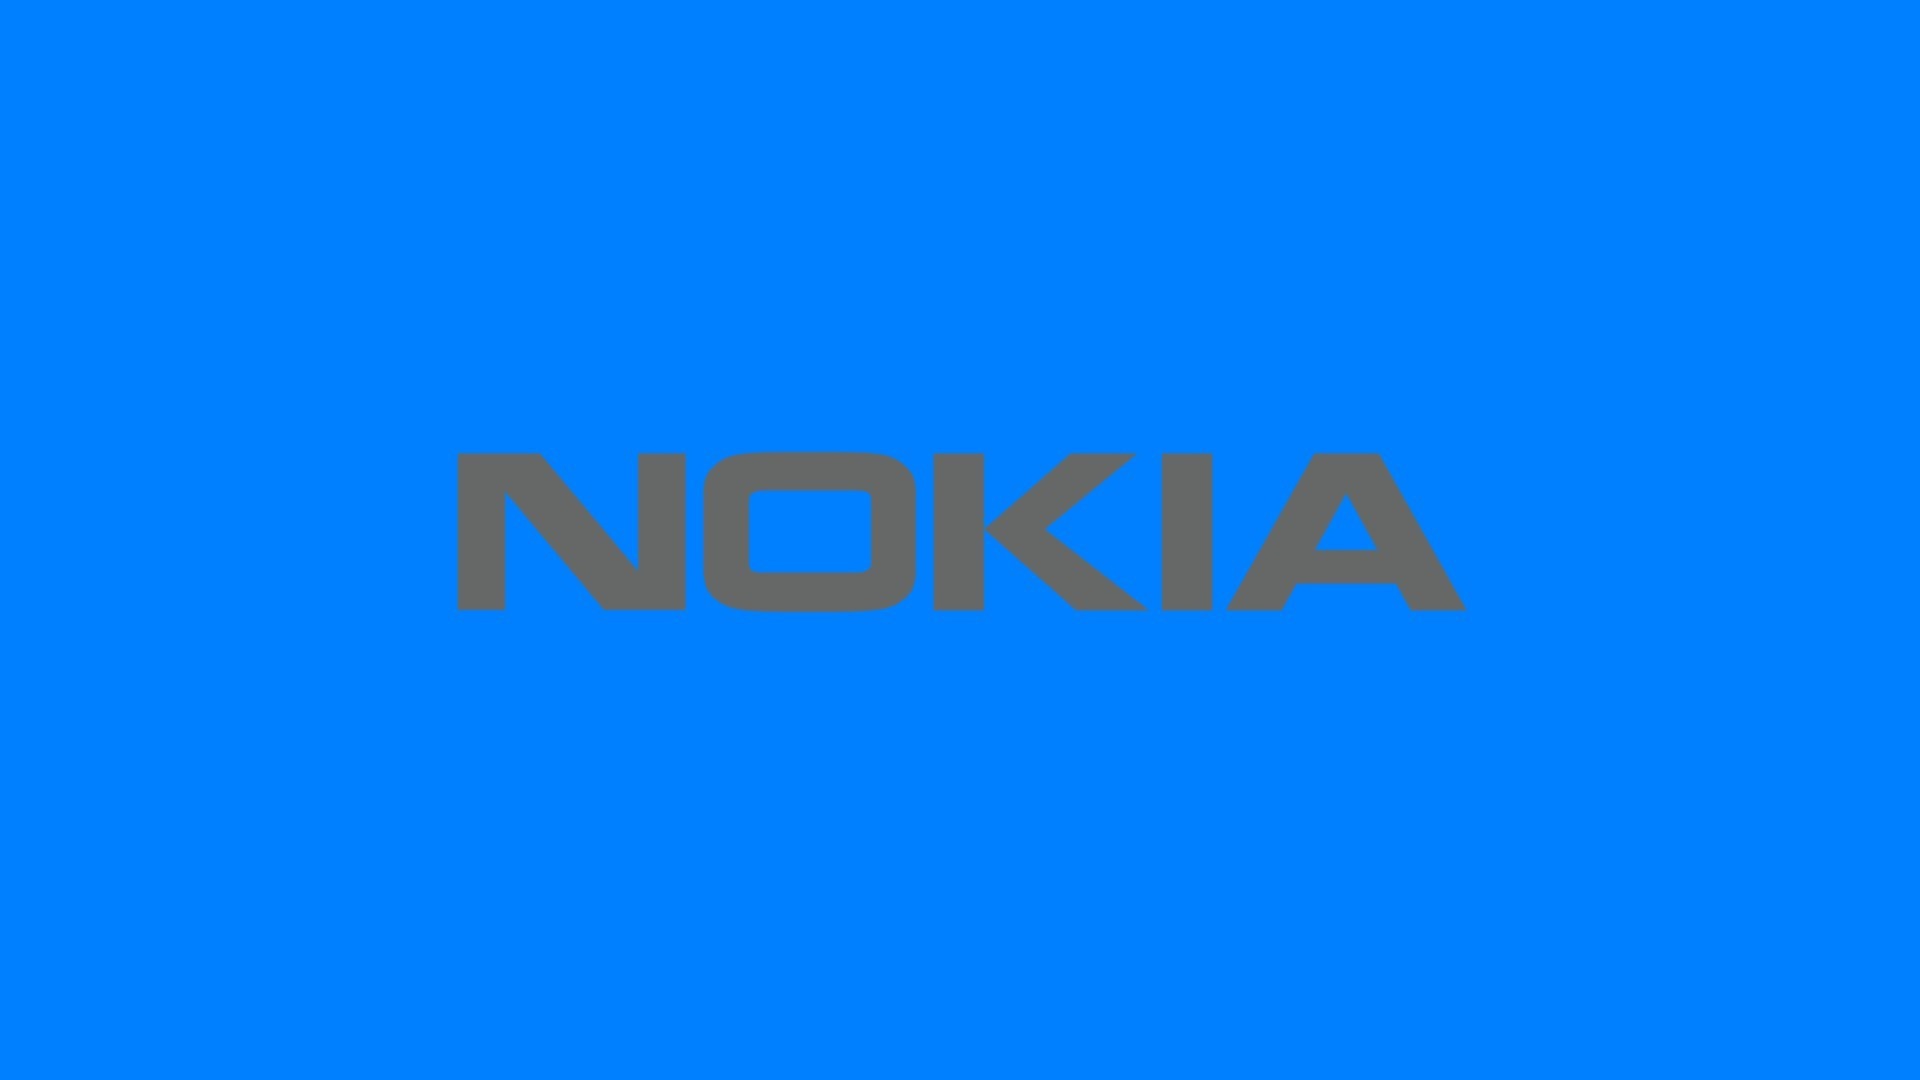 Nokia Logo Wallpaper Desktop Image